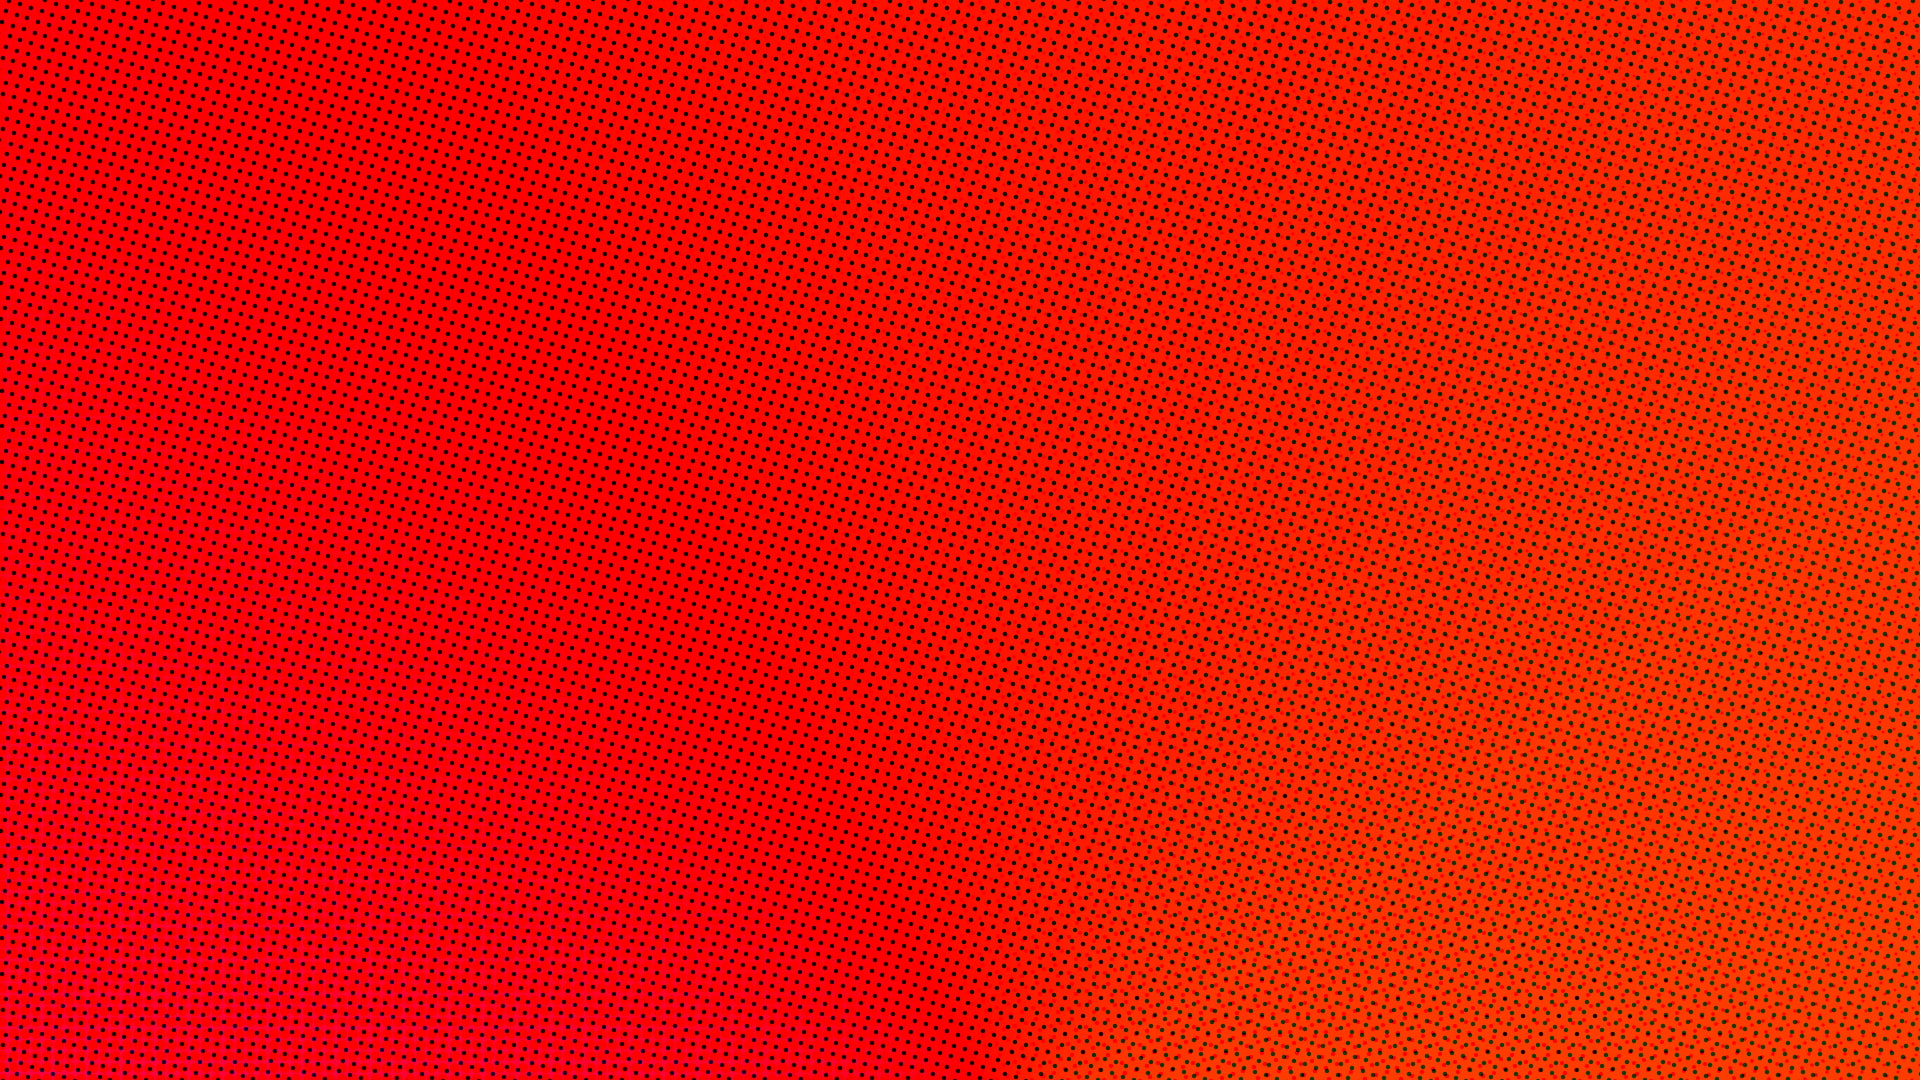 polka dots, tile, minimalism, simple, red, backgrounds, full frame